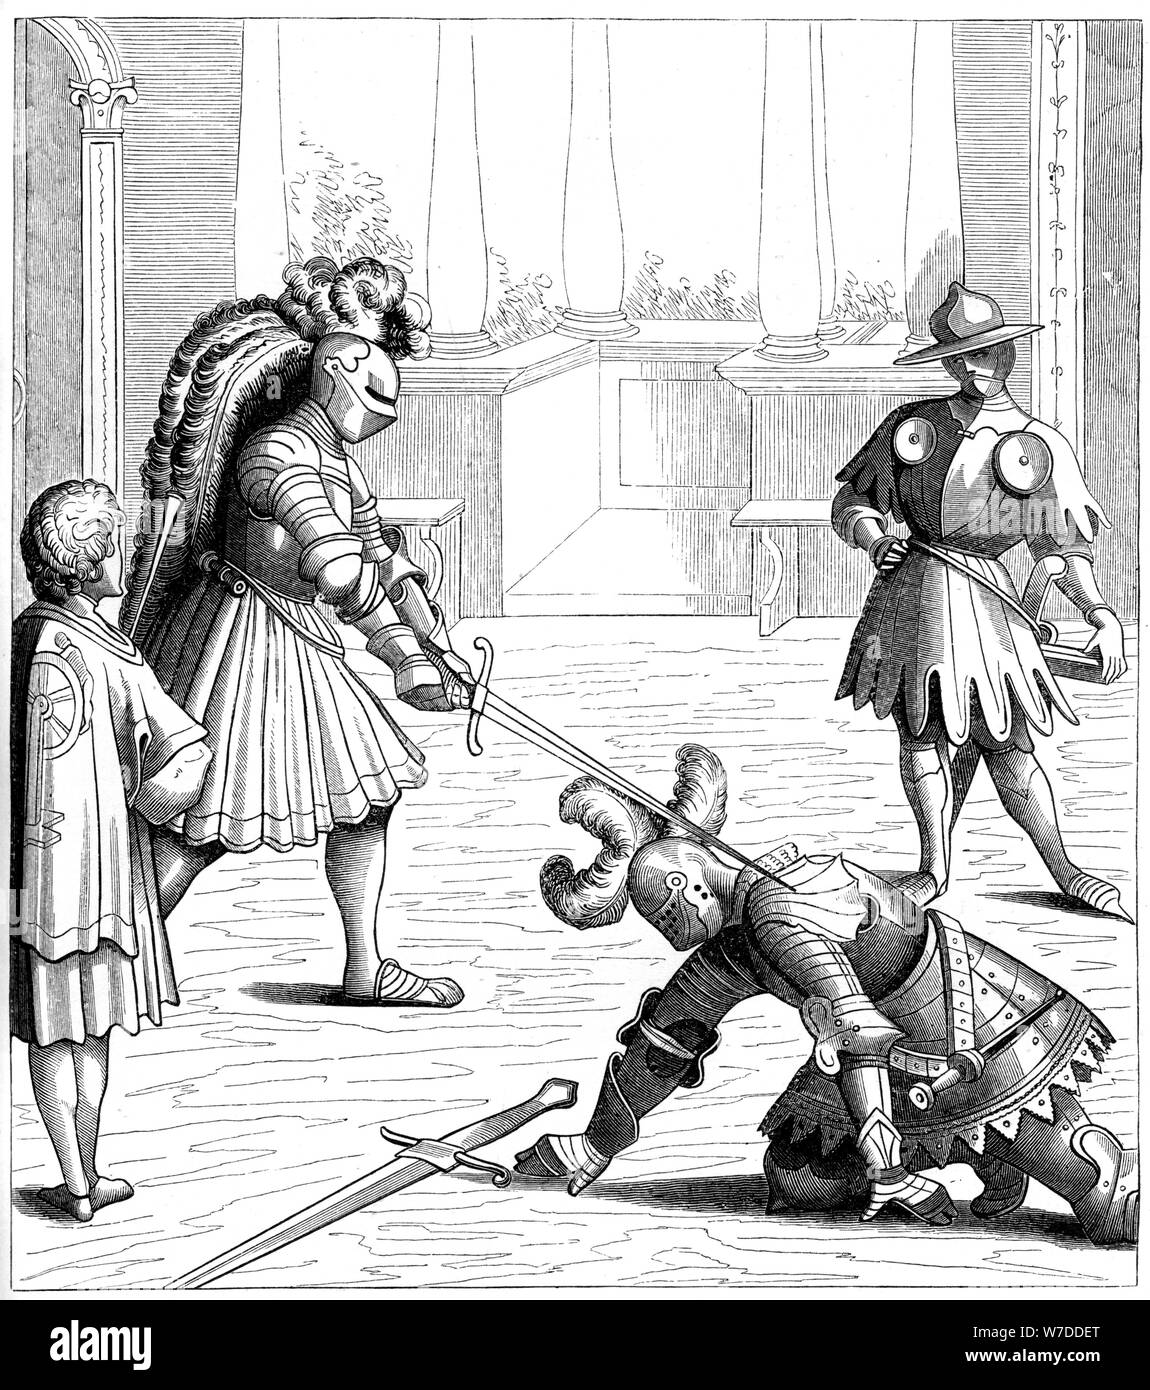 Single combat between Maximilien and a German knight, 15th century (1849).Artist: Burgmayer Stock Photo